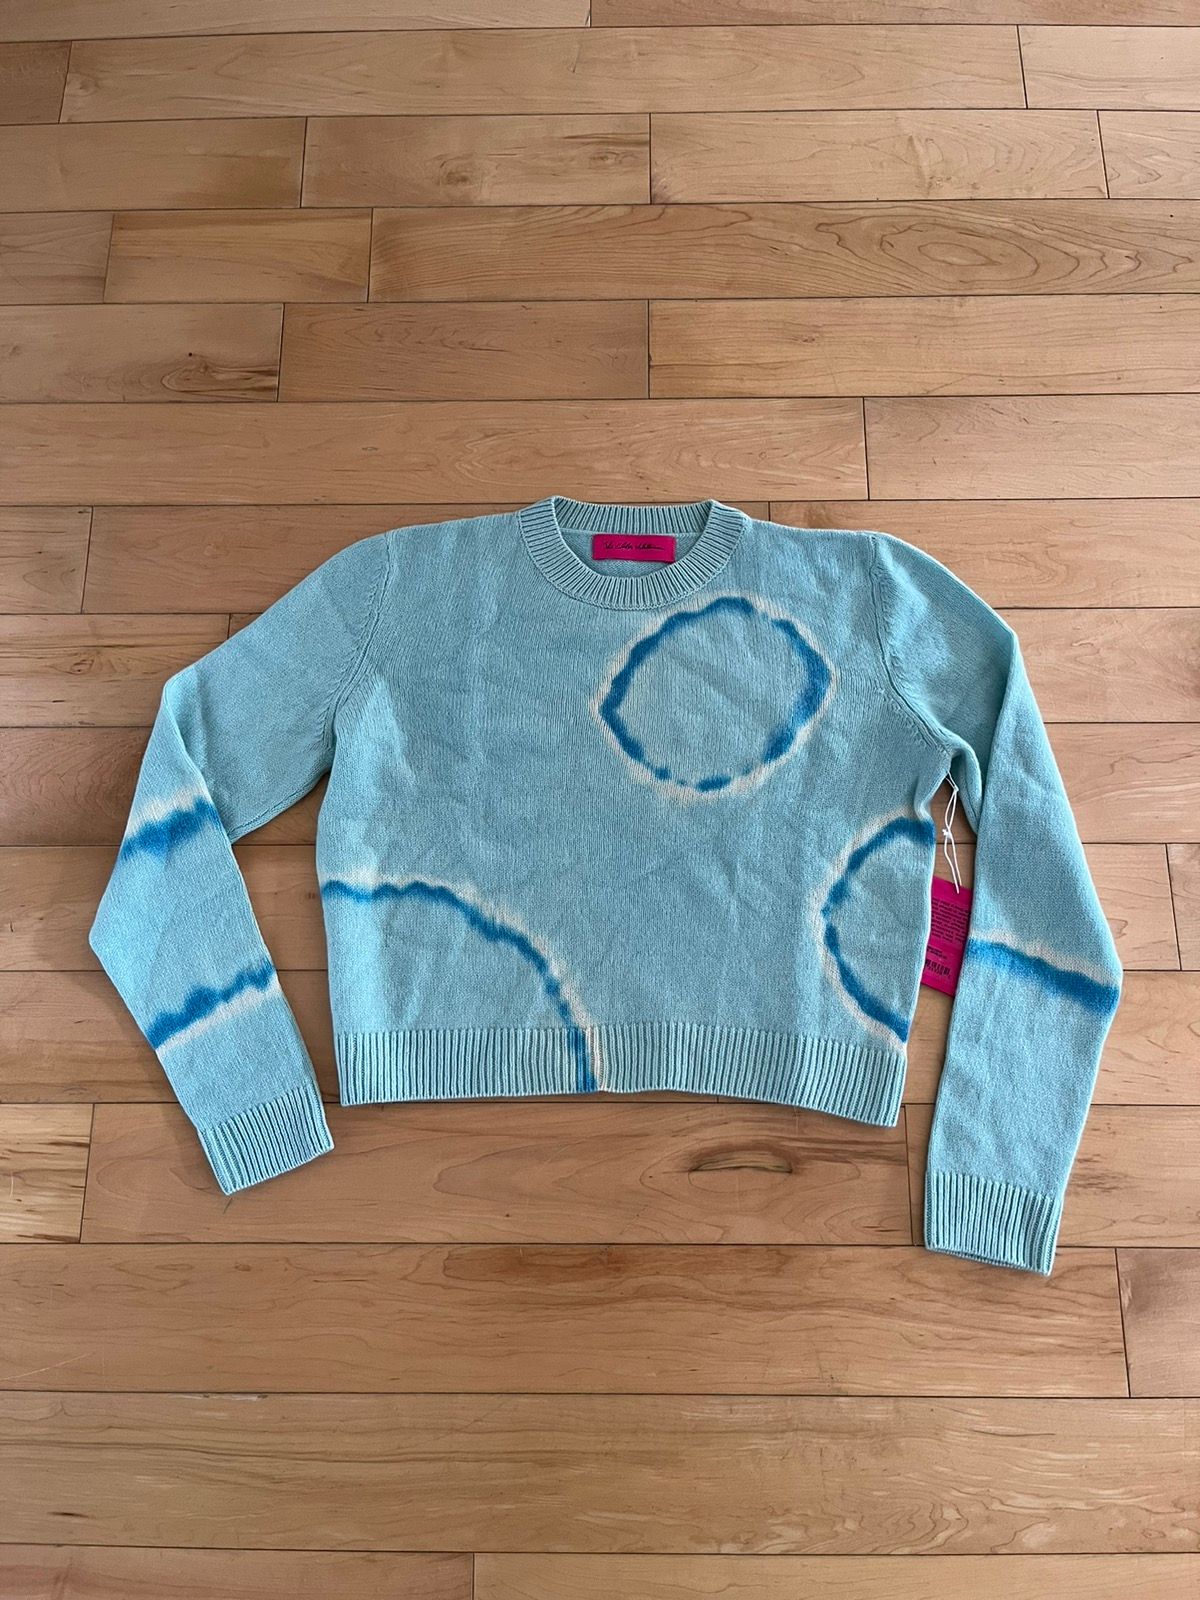 NWT - The Elder Statesman Molecule Cashmere Sweater - 1